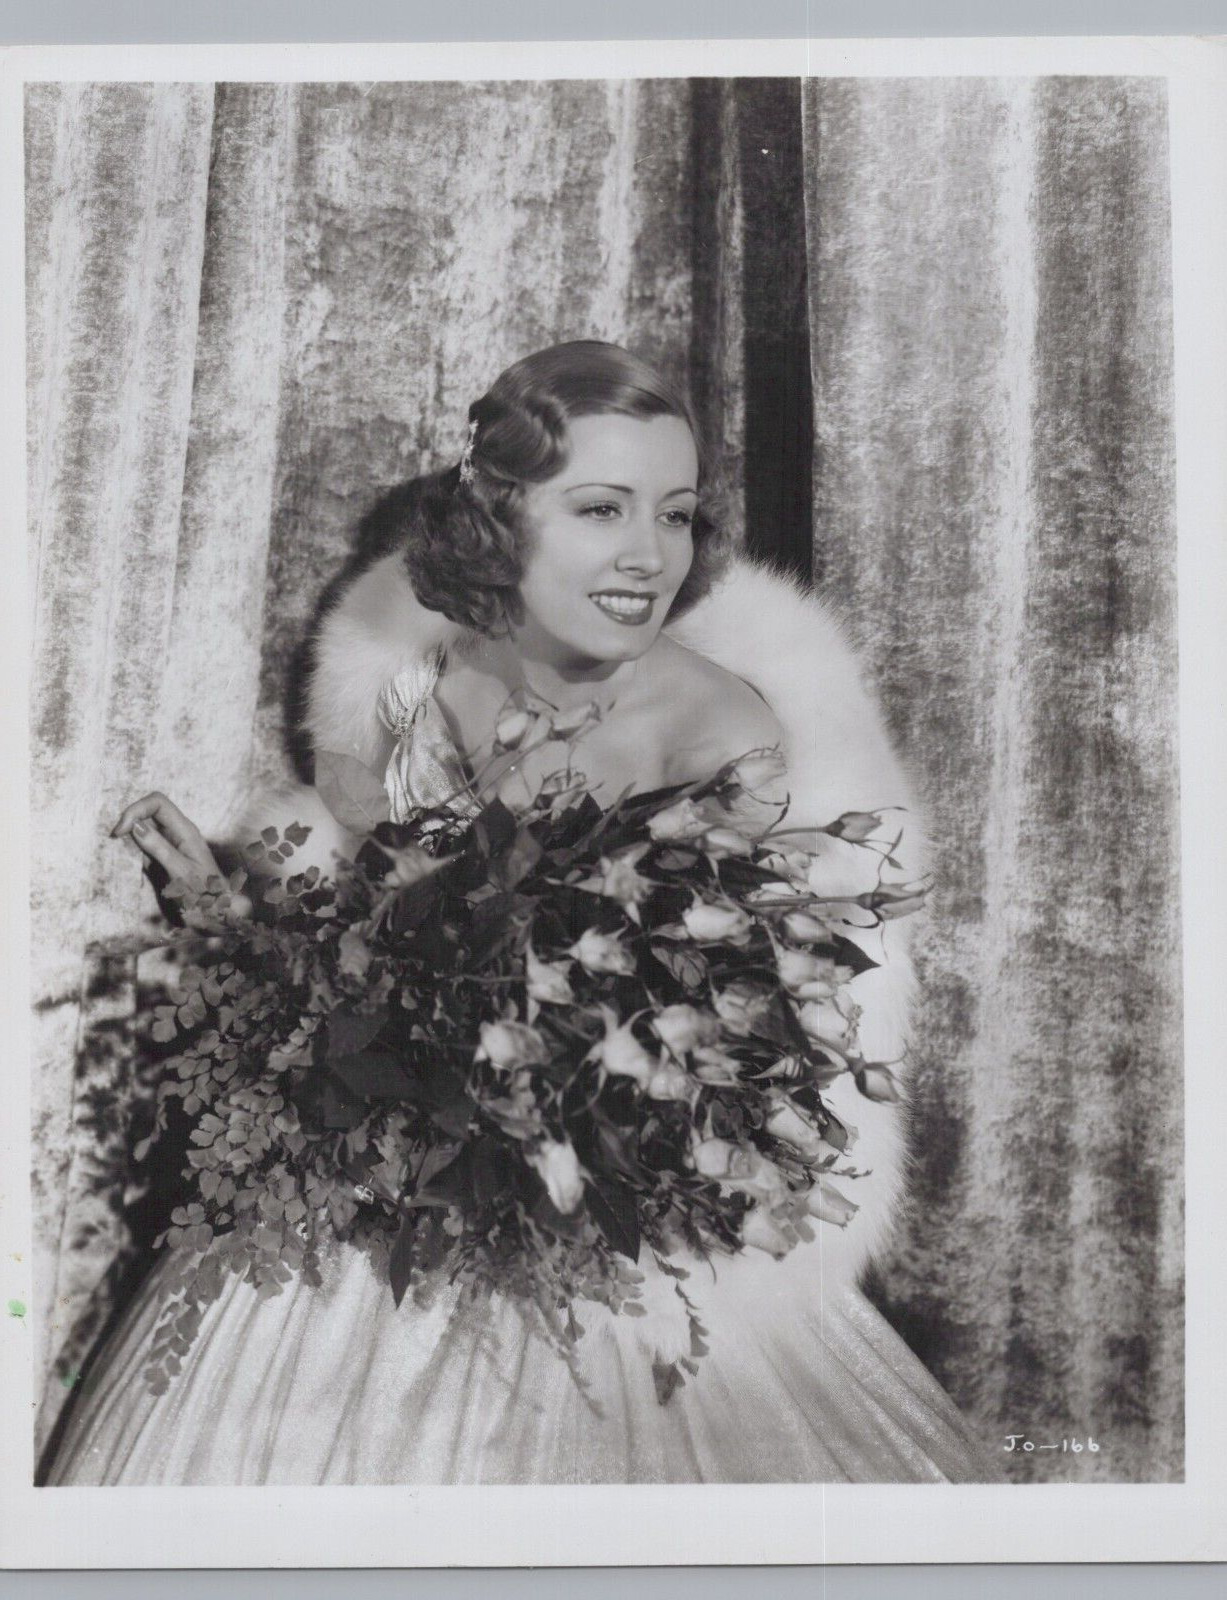 HOLLYWOOD BEAUTY IRENE DUNNE STYLISH POSE STUNNING PORTRAIT 1950s Photo C39